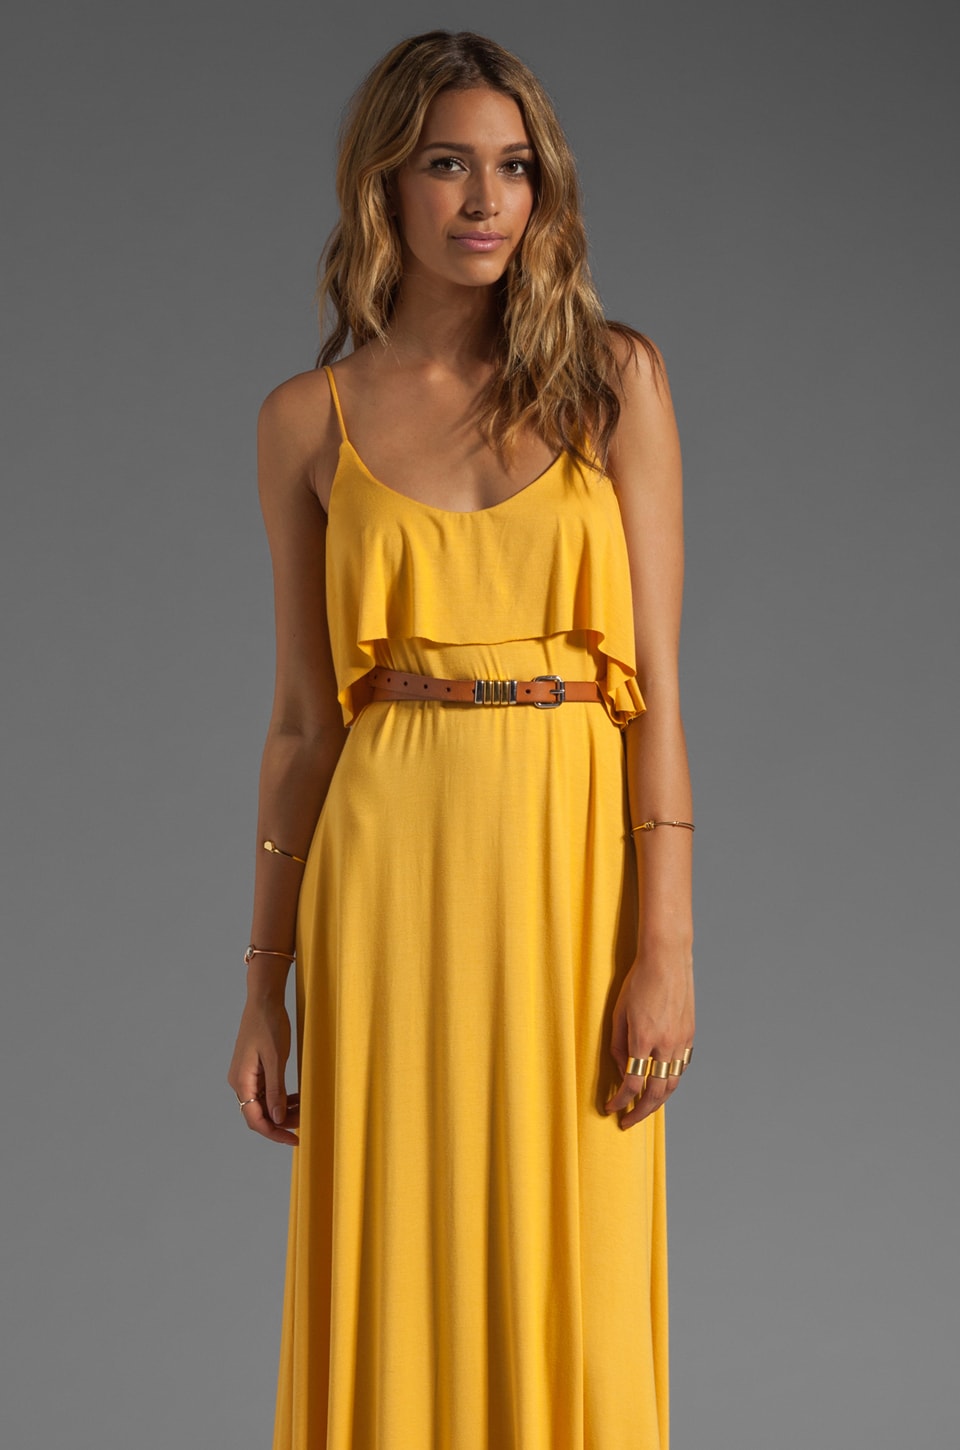 Rachel Pally Noomi Maxi Dress in Soleil | REVOLVE